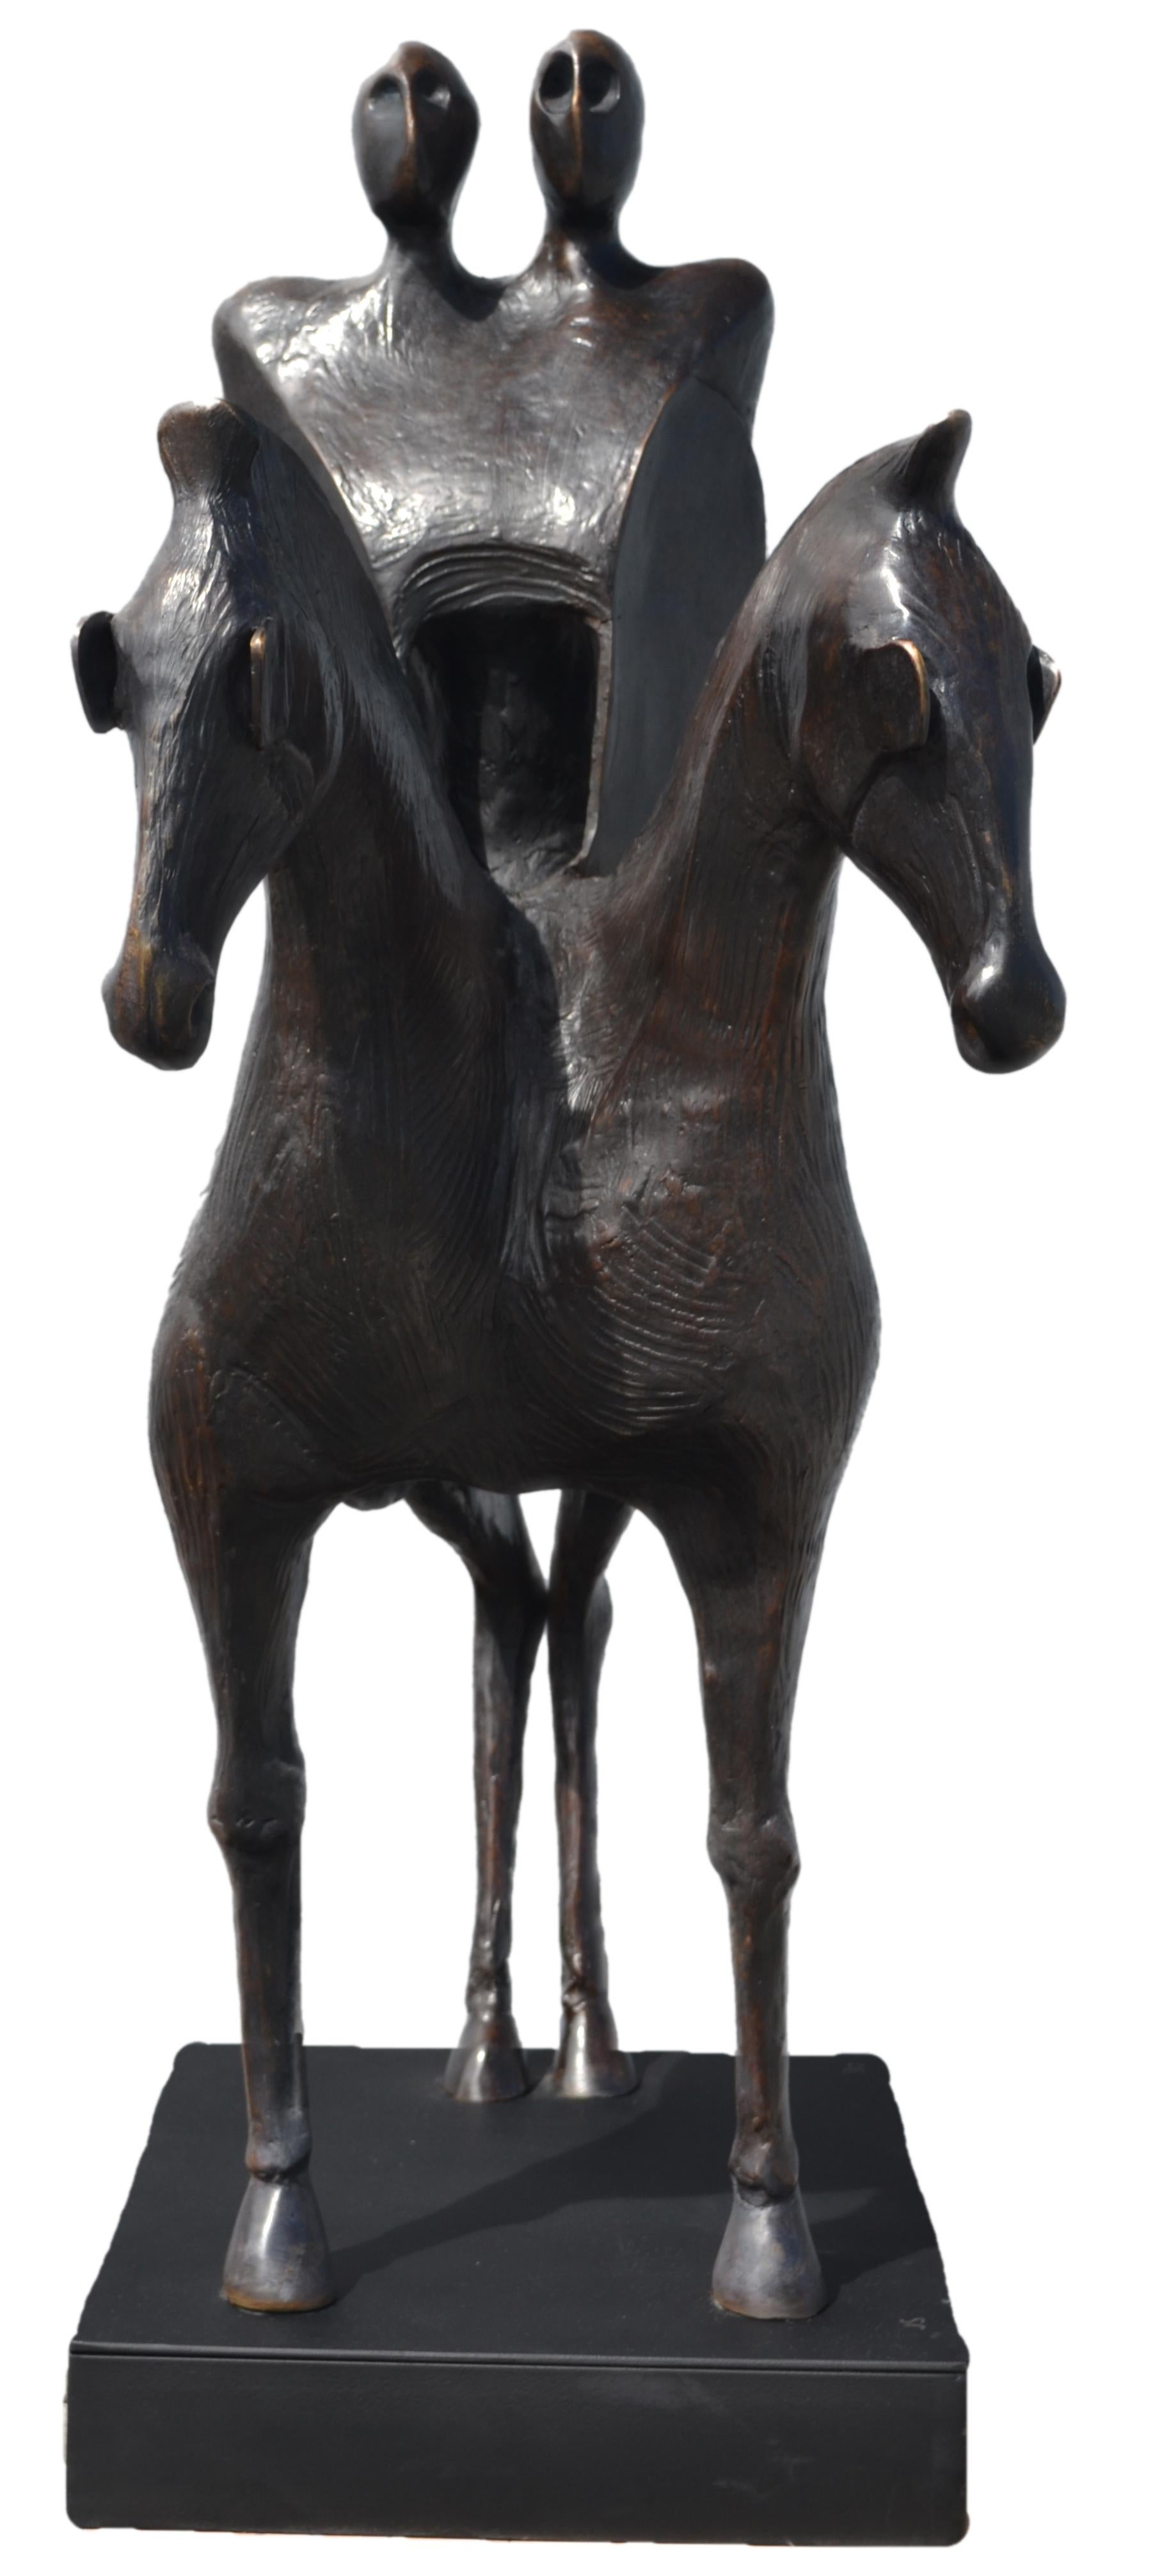 Jorge Seguí  Figurative Sculpture - Jorge Seguí, Falsos Heroes en Caballos Míticos, Bronze, Edition 1/7, 2010-2013